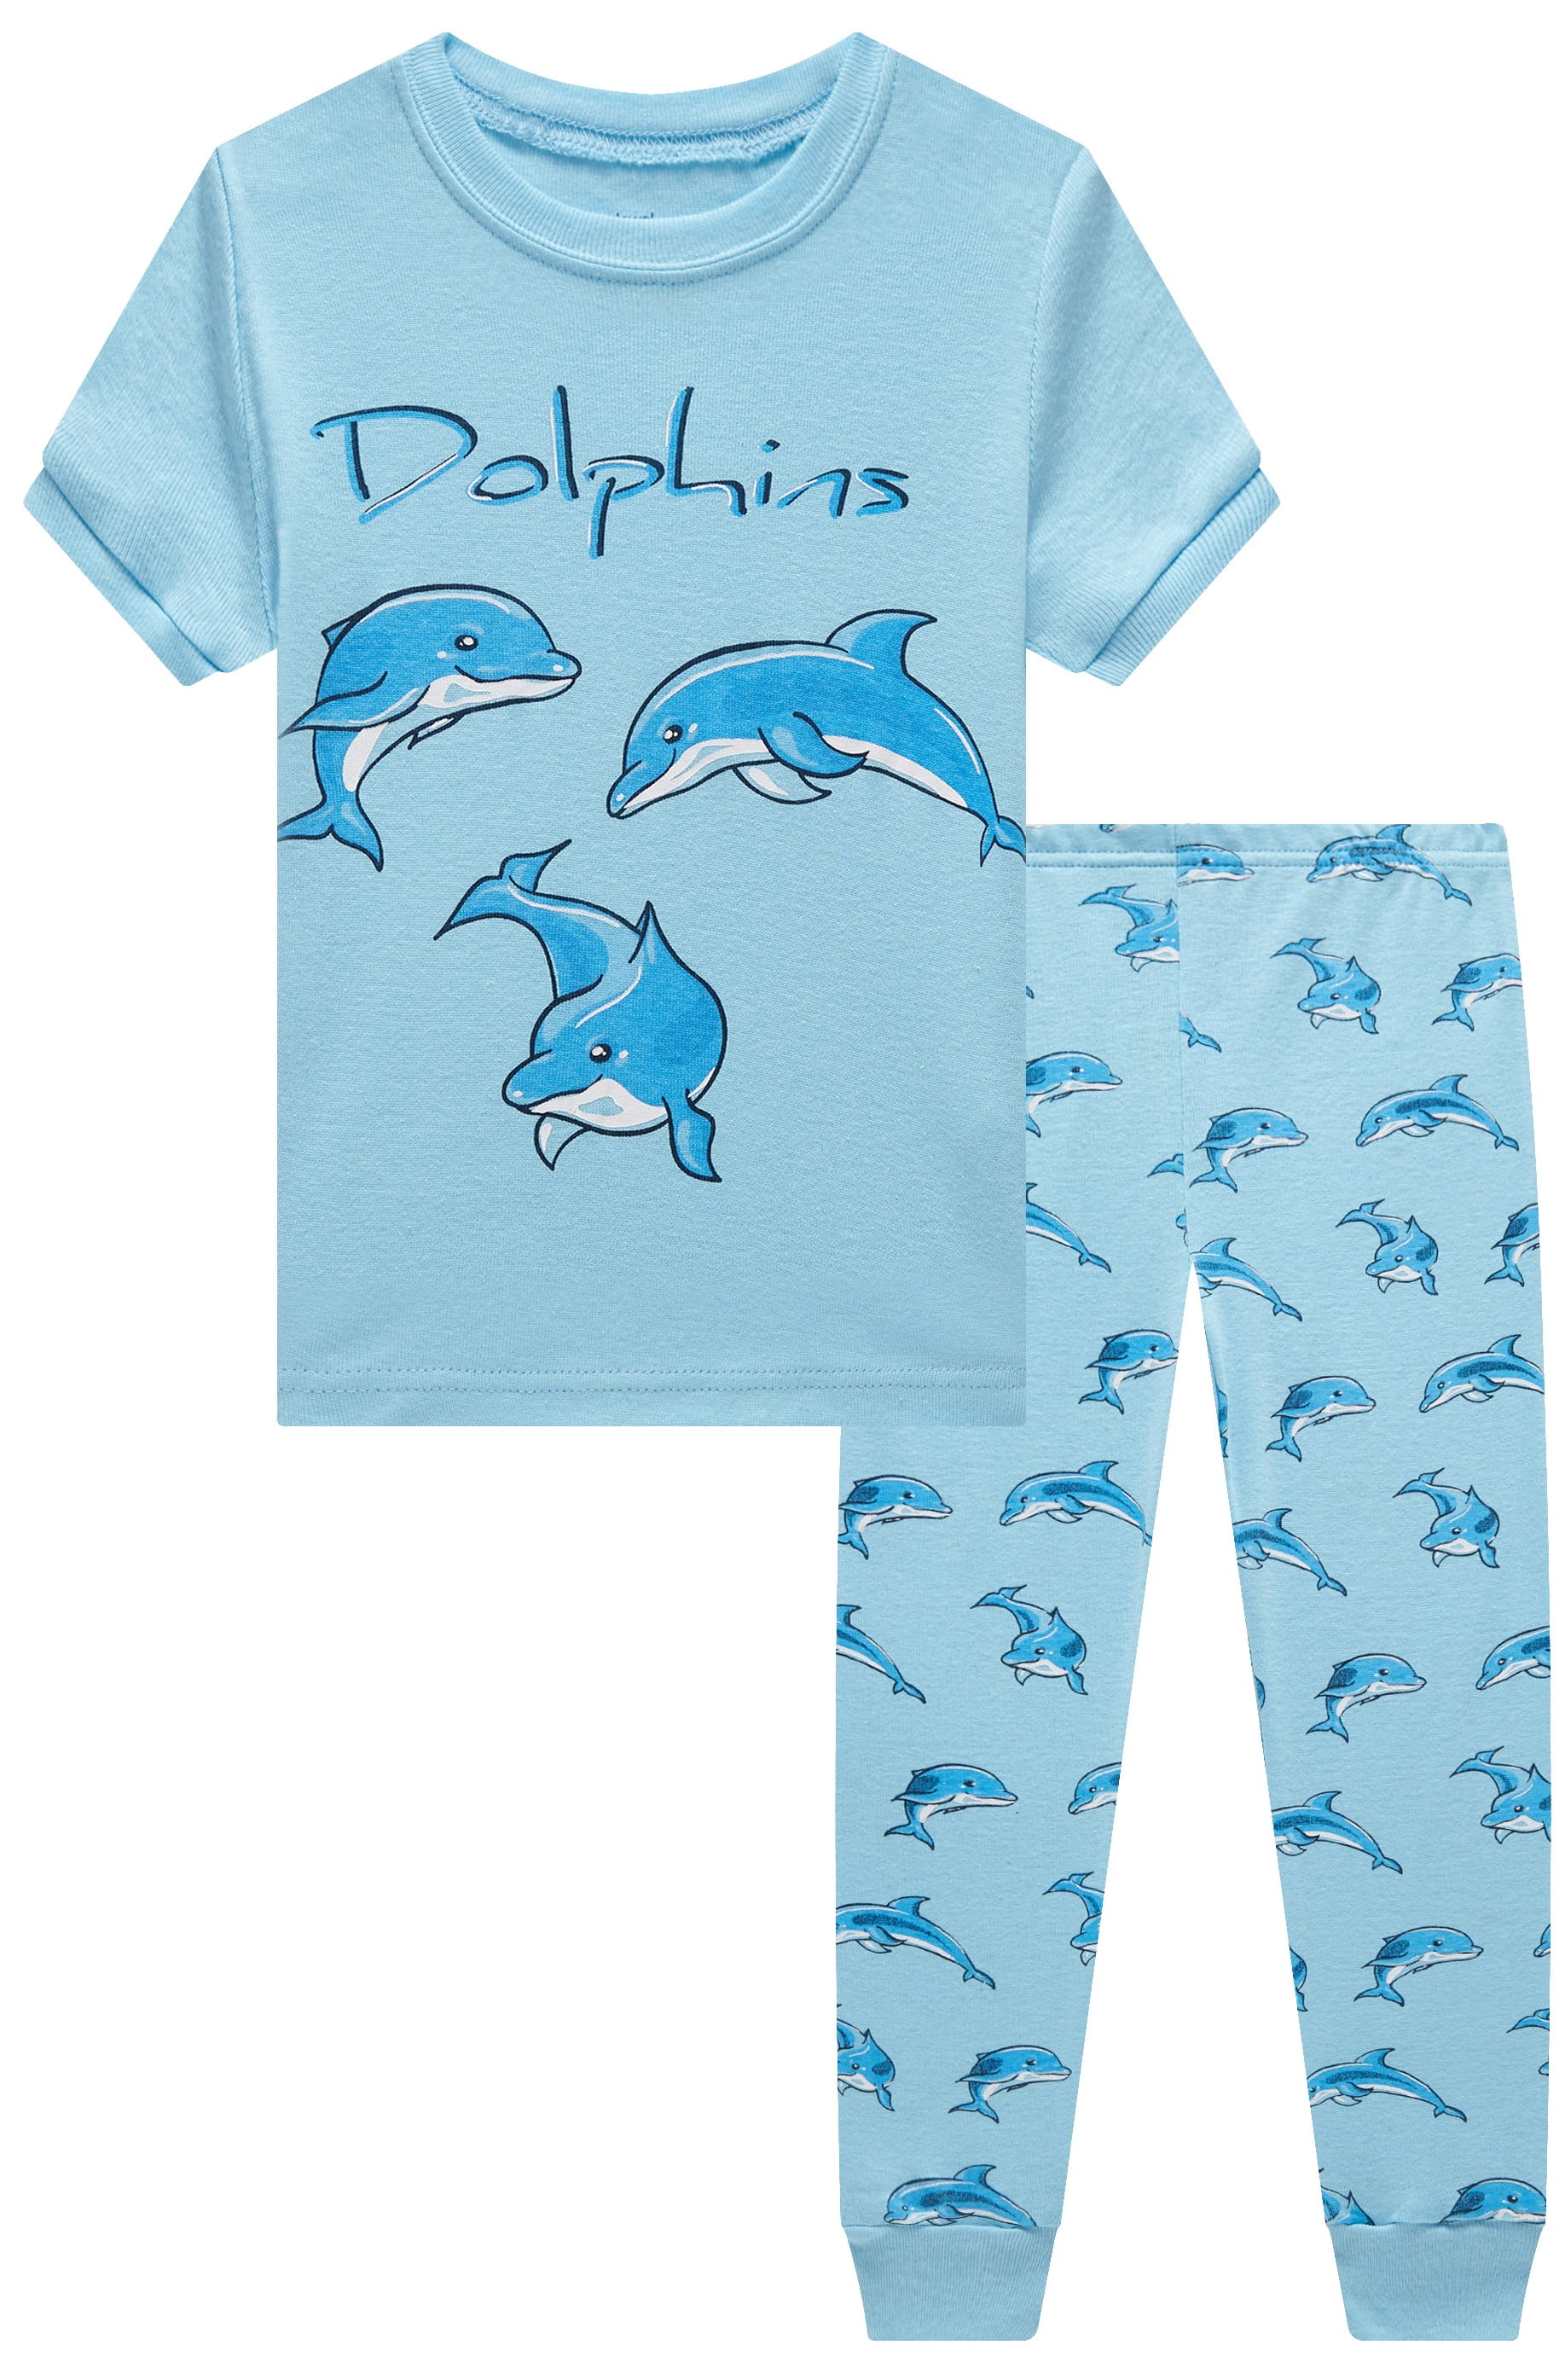 Dolphin&Fish Boys Pajamas Kids Clothes Toddler Pjs Sets Cotton Sleepwears 